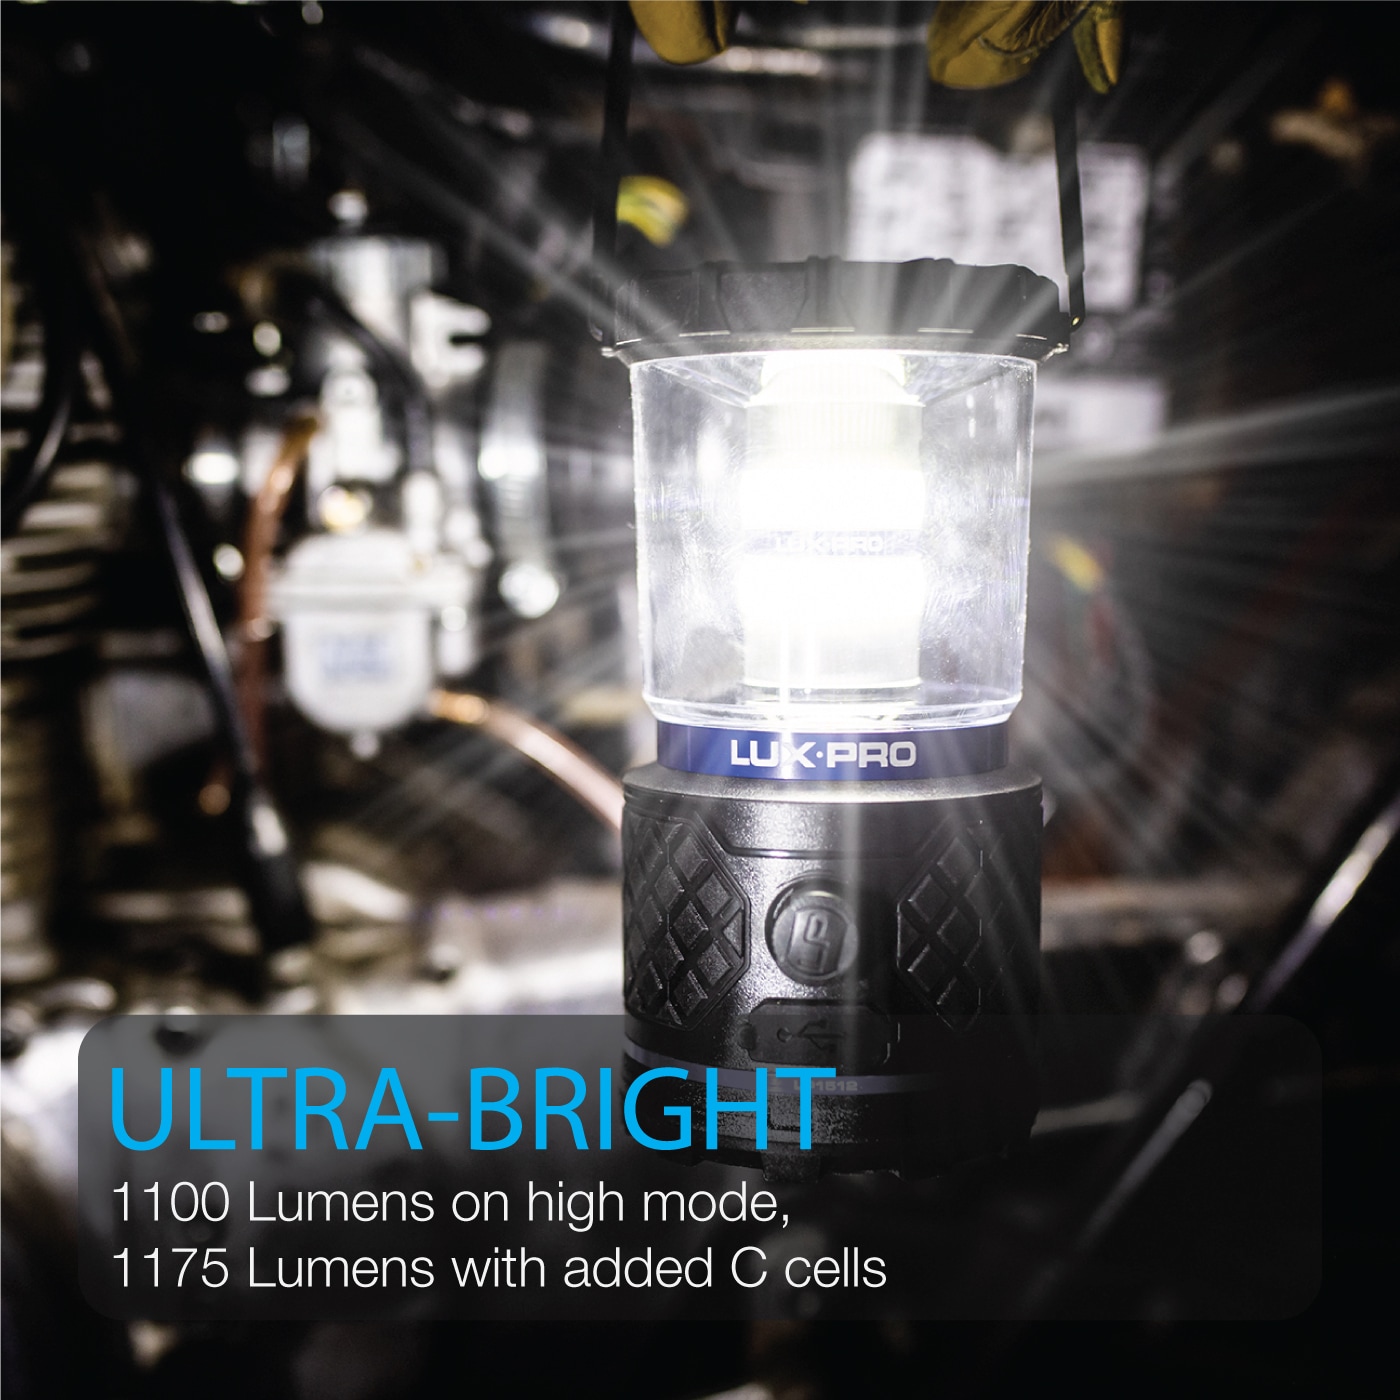 Luxpro LP1520 Rechargeable Multi-mode 600 Lumen Spotlight Lantern